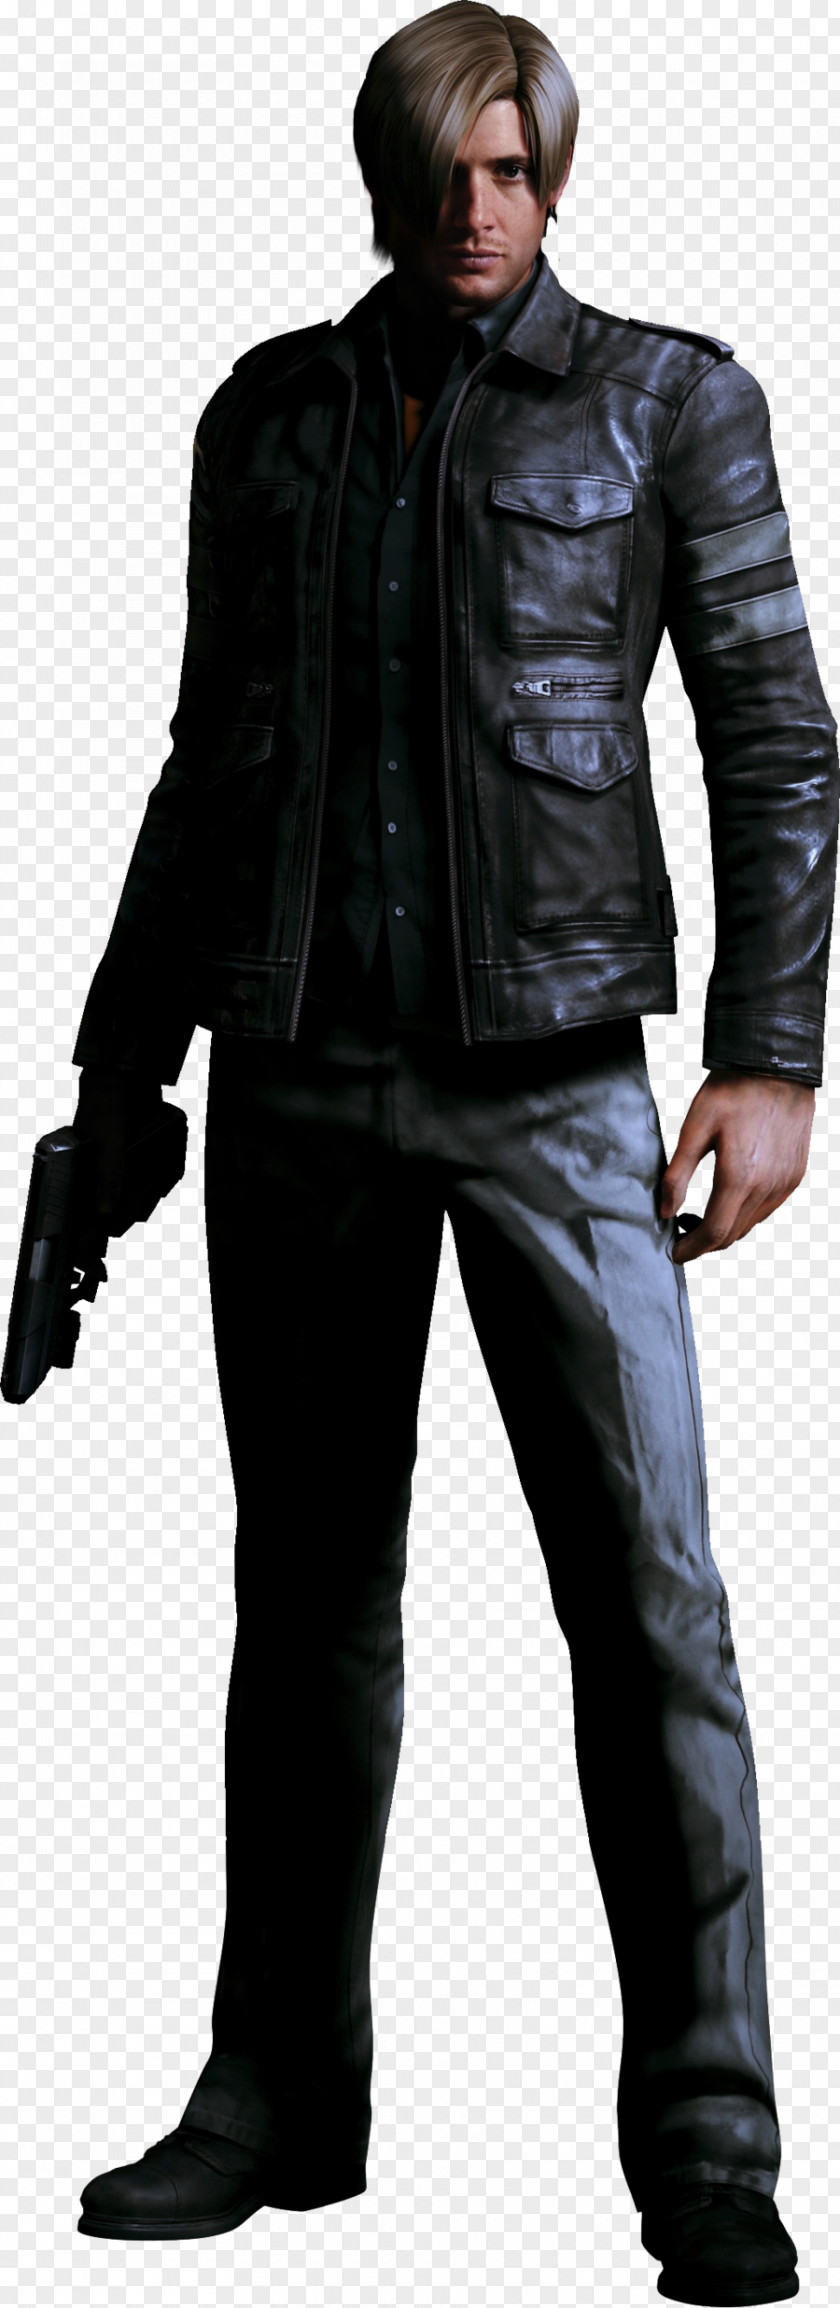 Jensen Ackles Resident Evil 6 4 2 Leon S. Kennedy Chris Redfield PNG